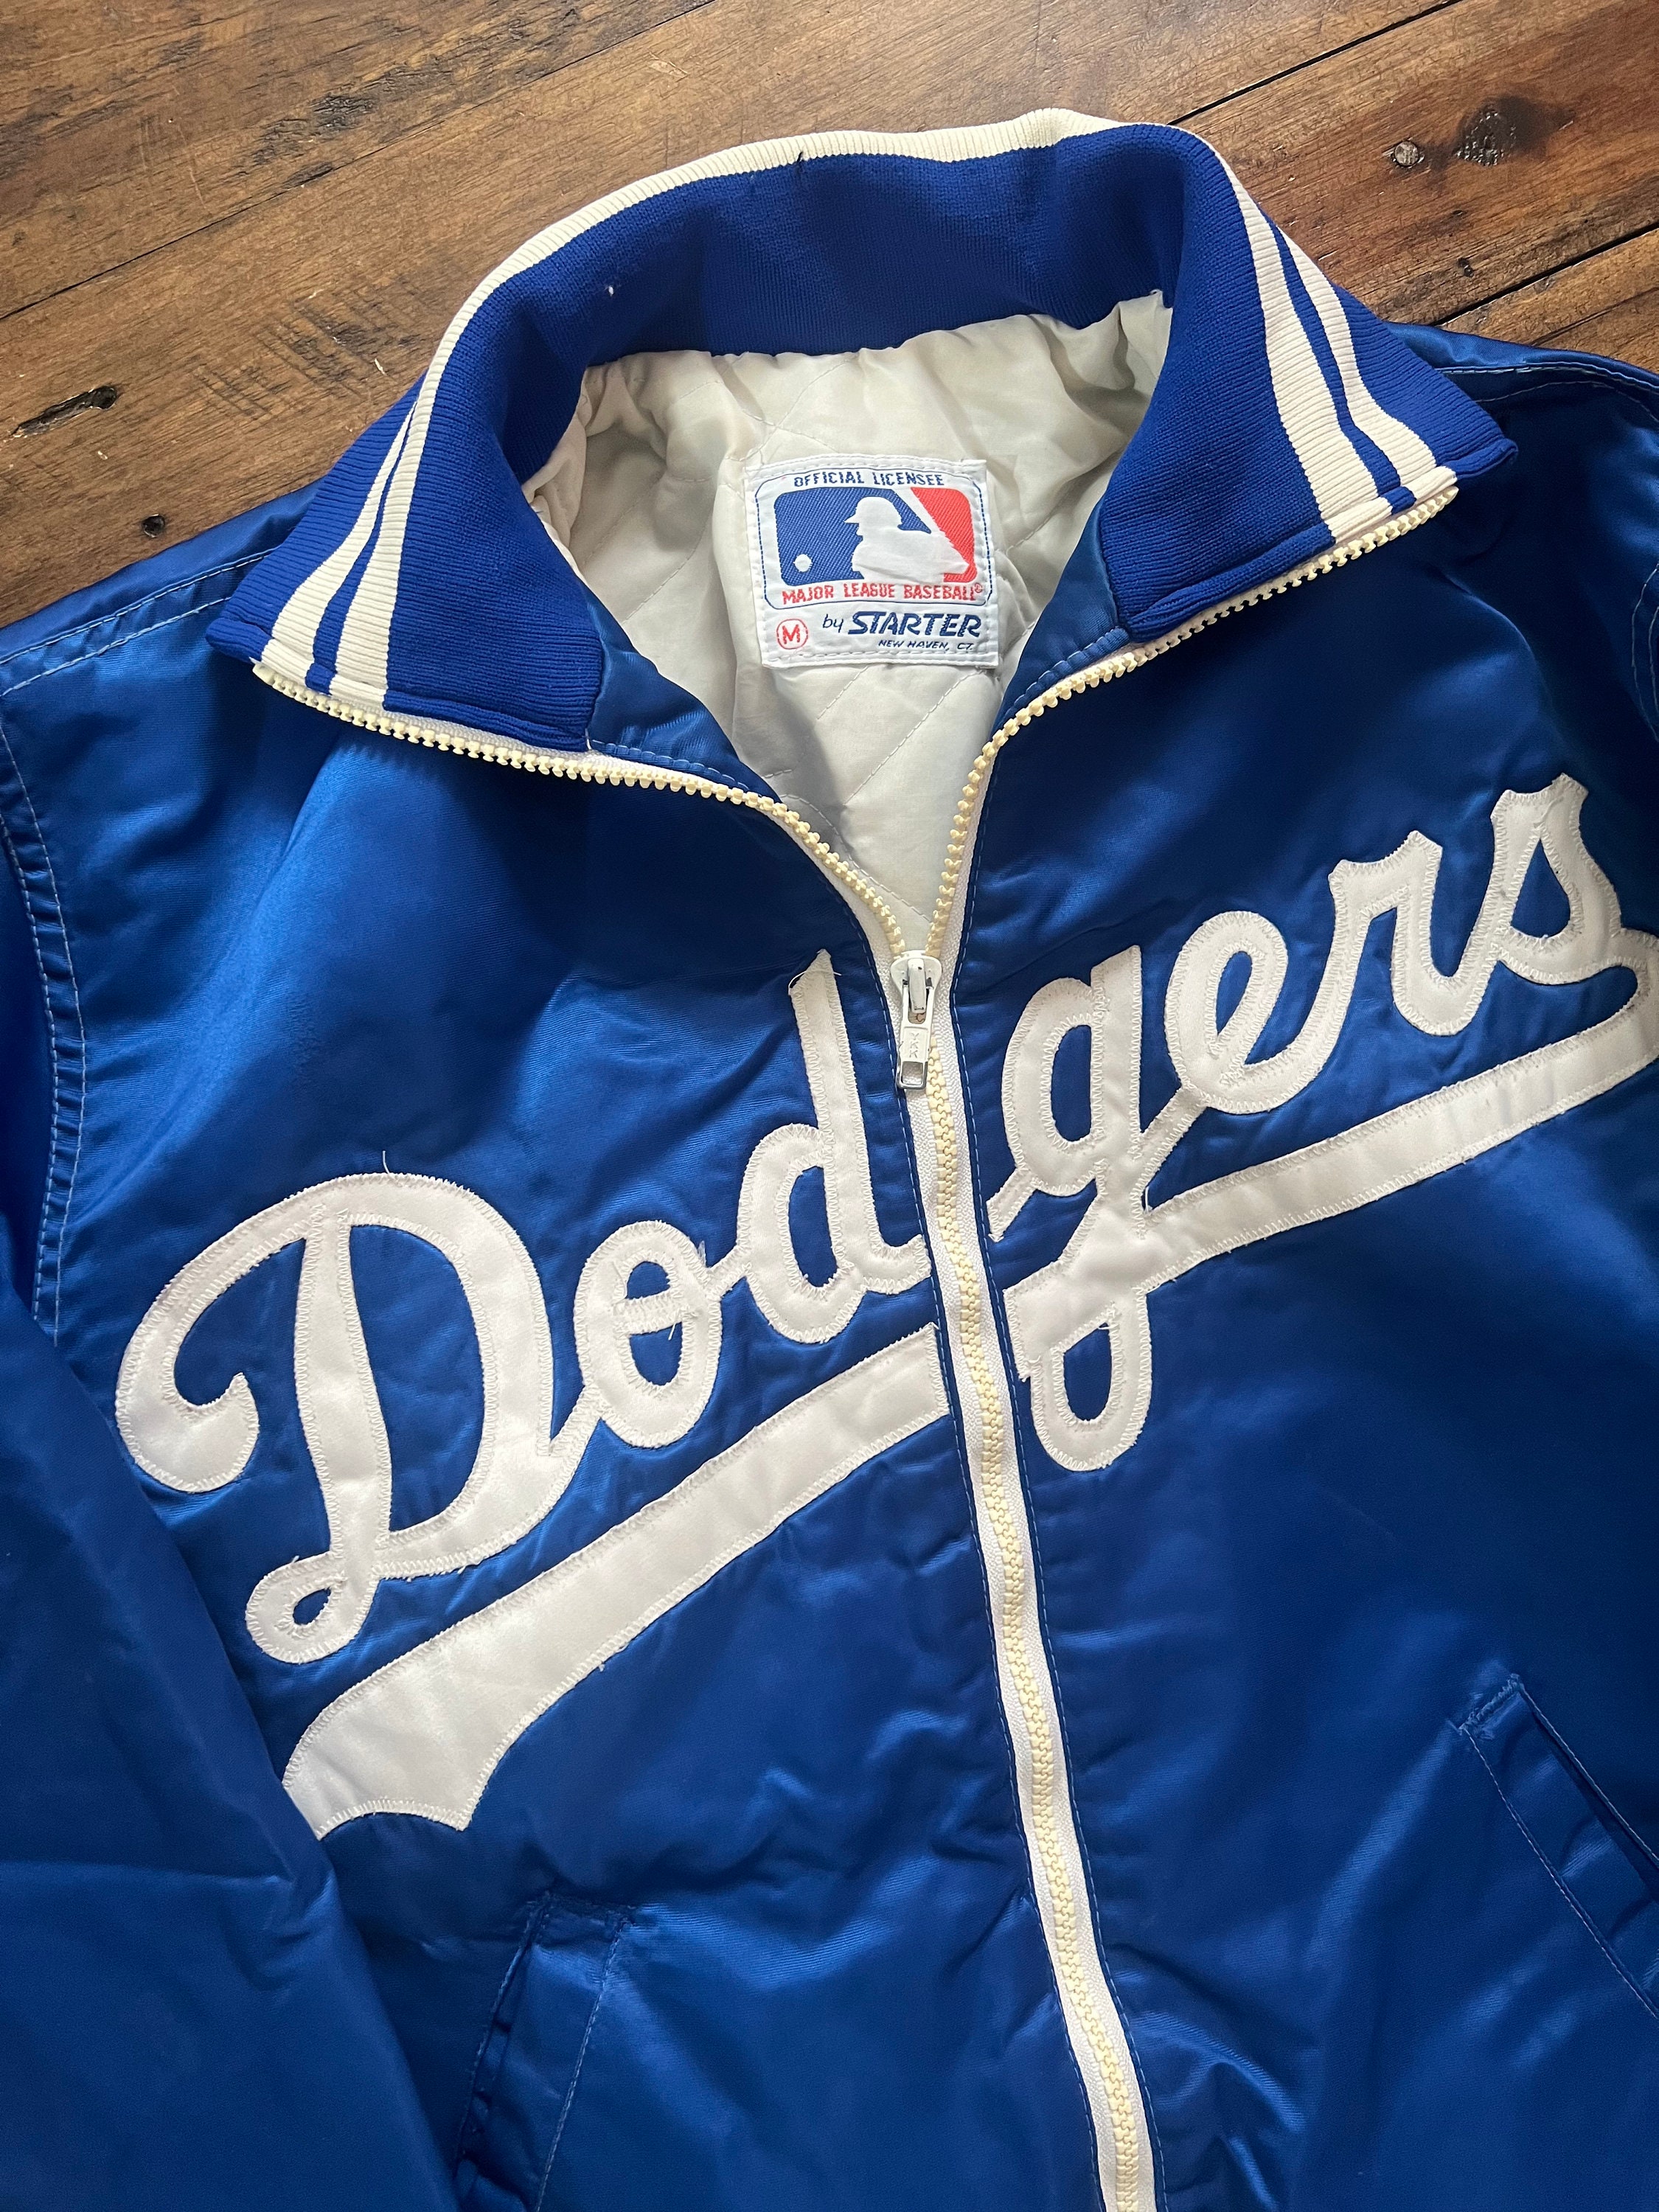 Dodgers 1980s Starter Jacket – RCNSTRCT studio